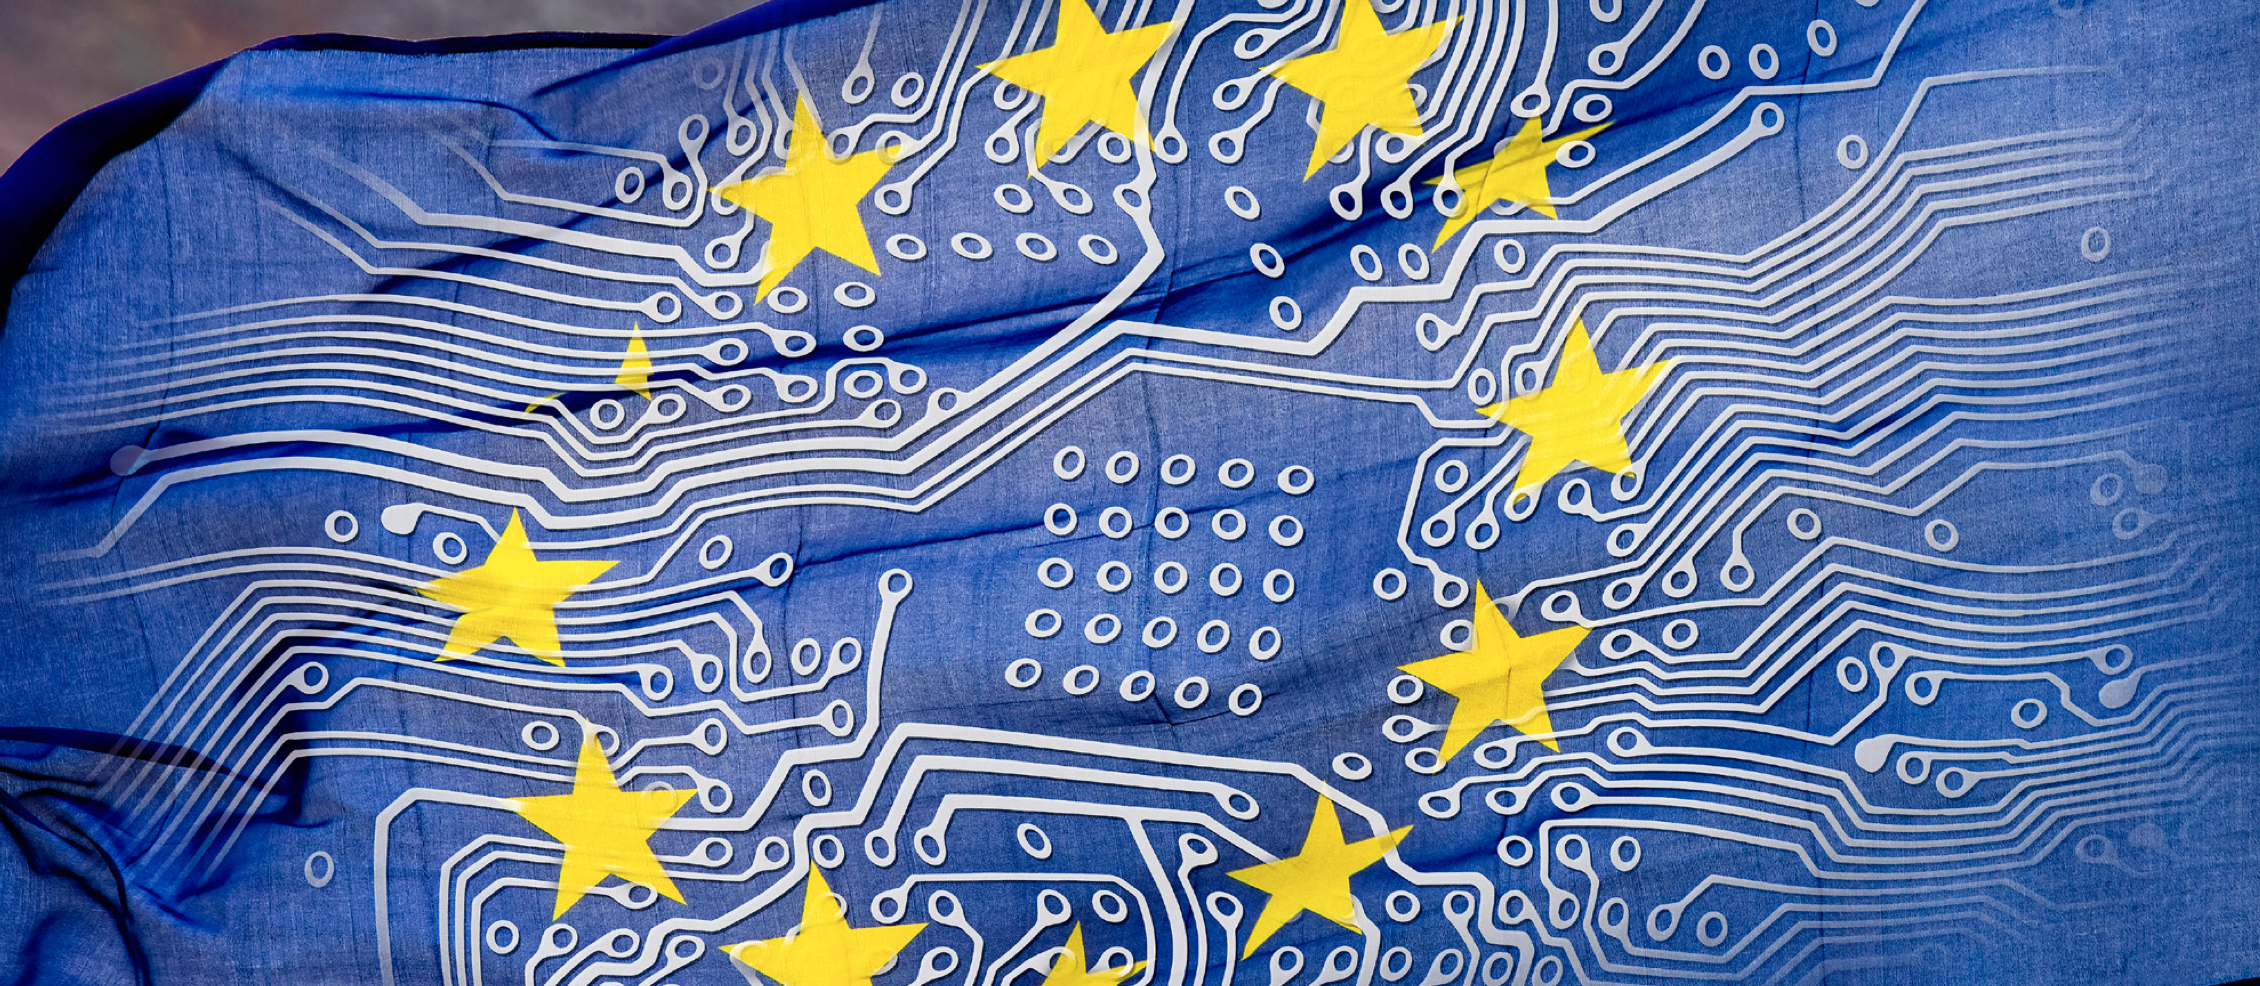 EIT Digital, sovranità sì ma che sia digitale ed europea